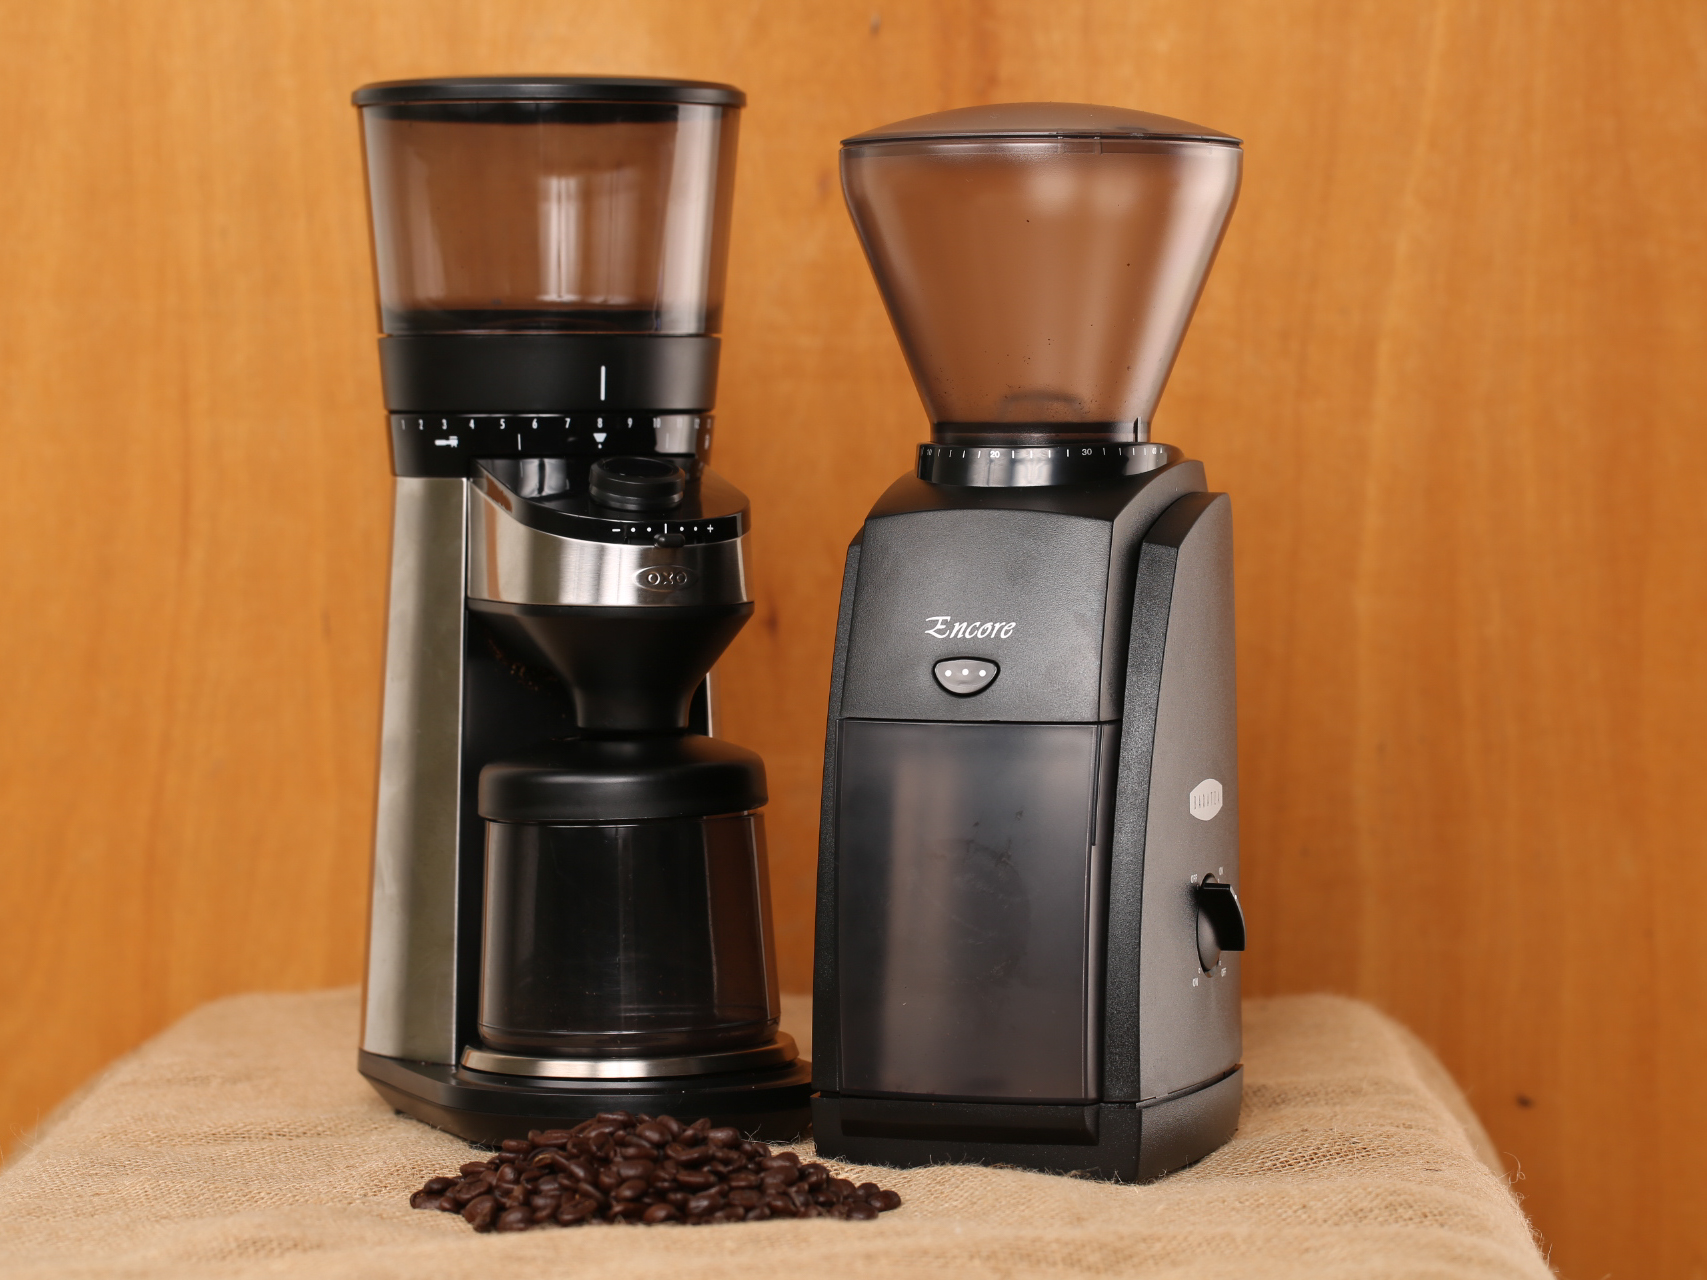 https://www.cnet.com/a/img/hub/2017/01/27/807ba453-2a18-4a76-81b8-bdc2aeeabd2e/oxo-and-baratza-coffee-grinders-1.jpg